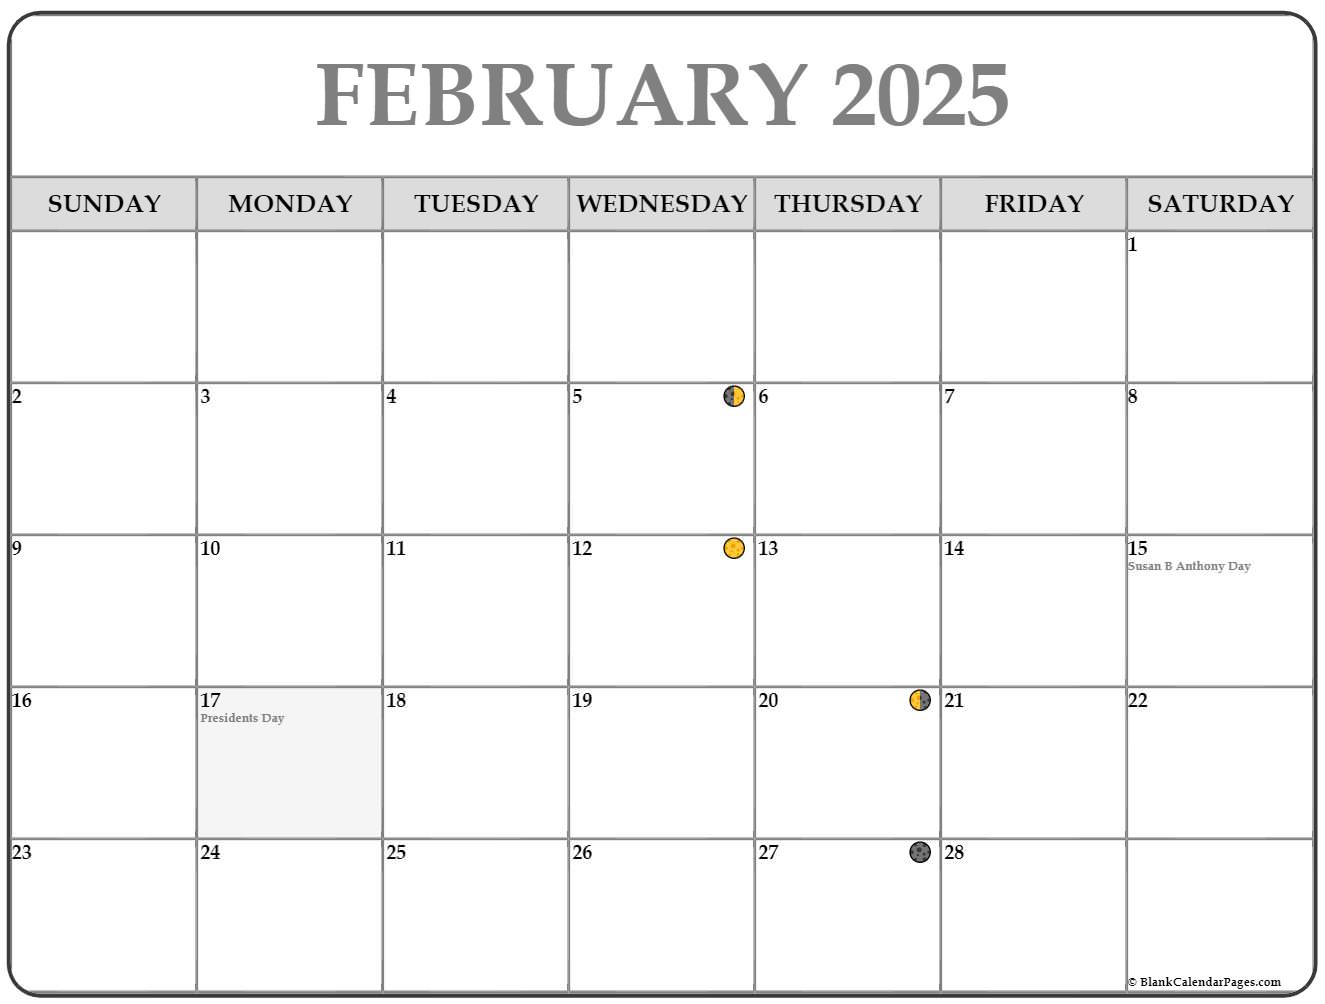 february-2025-lunar-calendar-moon-phase-calendar